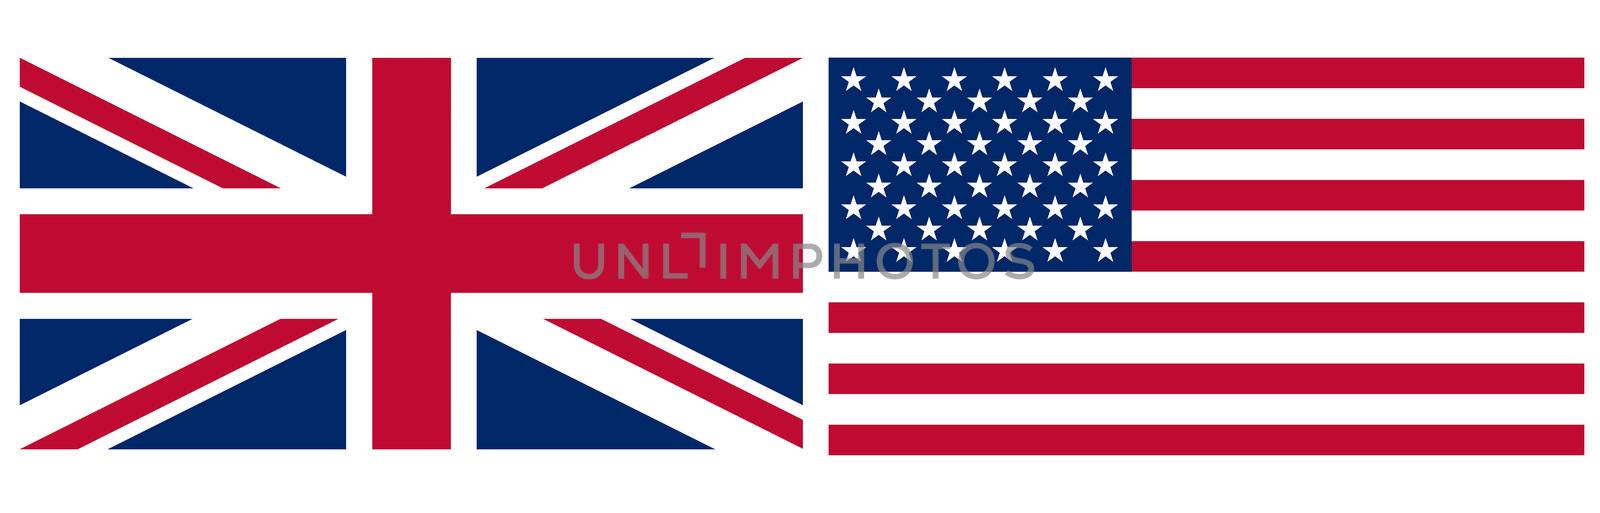 flags, Uk and USA